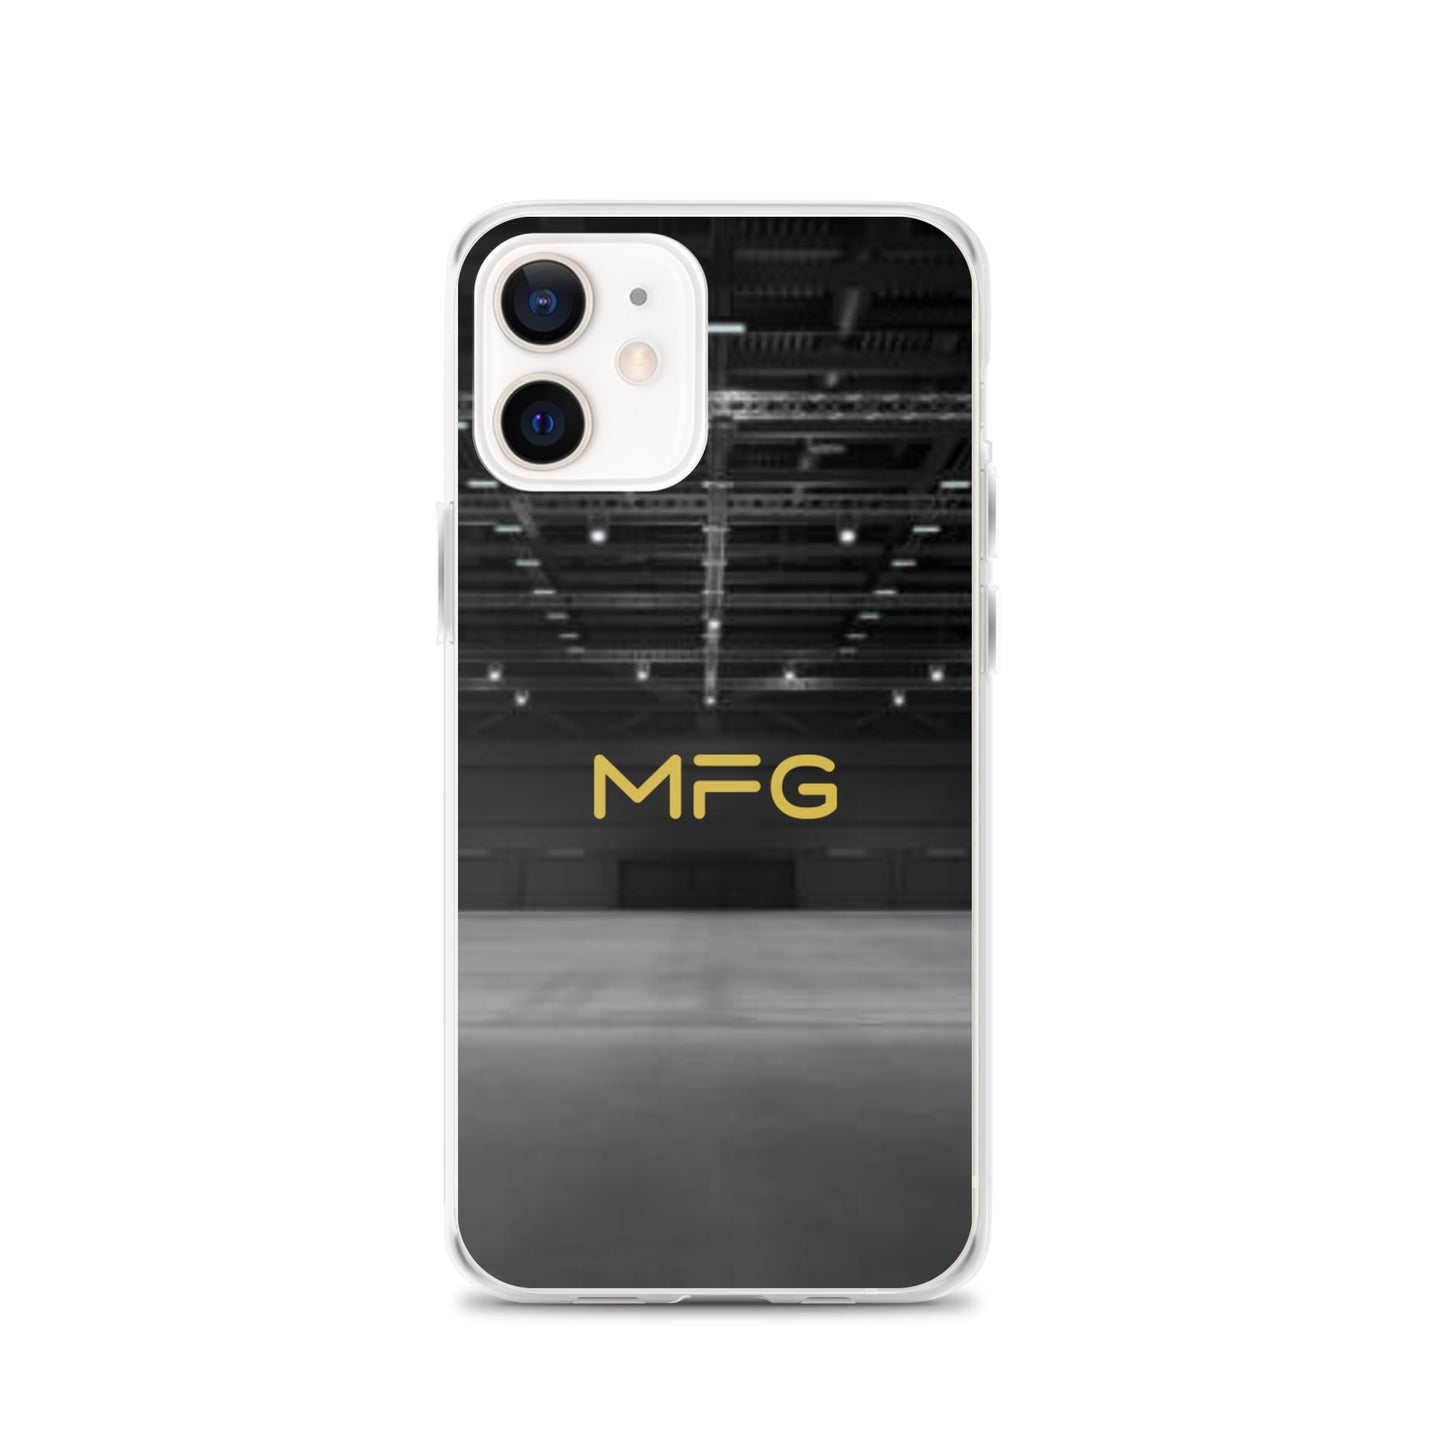 Building [MFG] iPhone Case